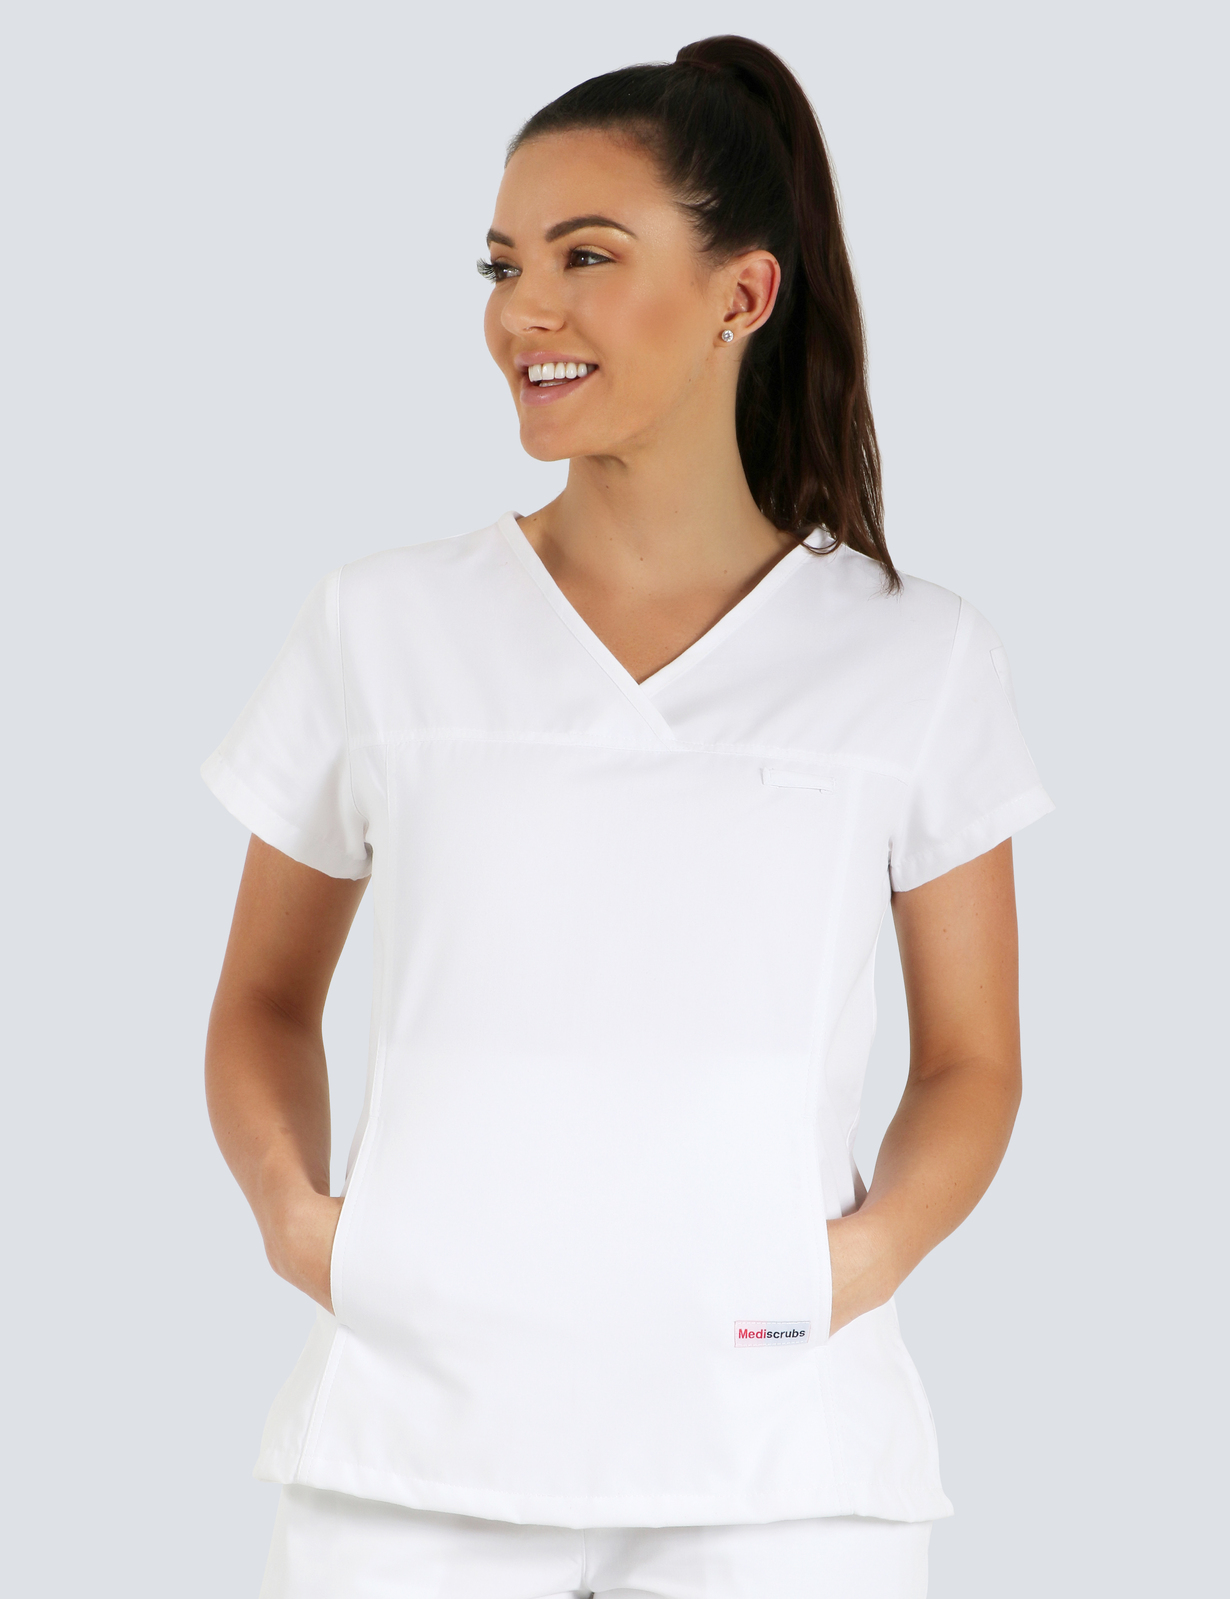 Queensland Children's Hospital Emergency Department Nurse Practitioner Uniform Top Bundle  (Women's Fit Top in White incl Logos)